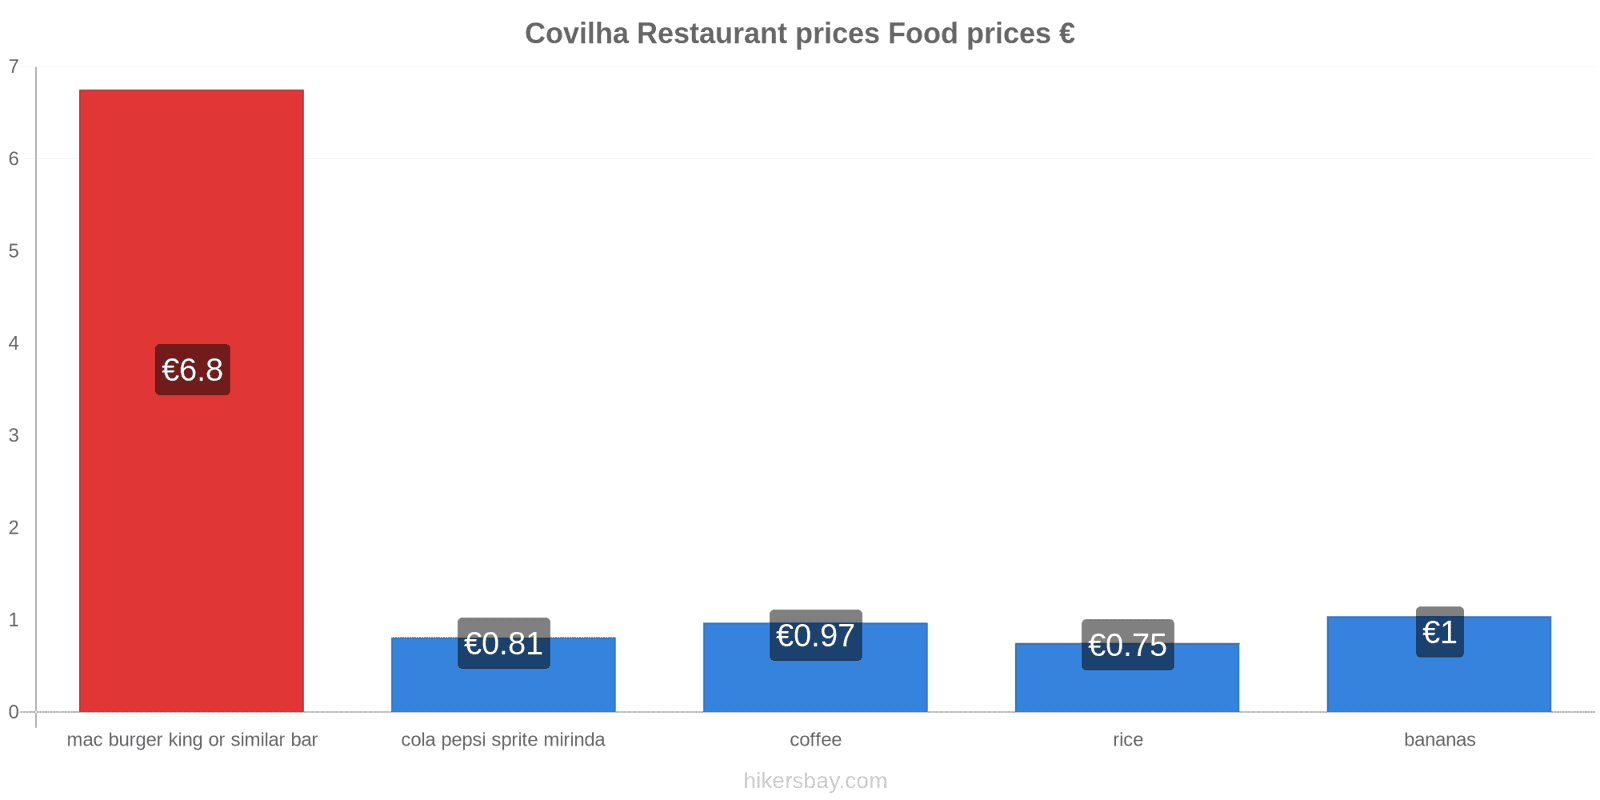 Covilha price changes hikersbay.com